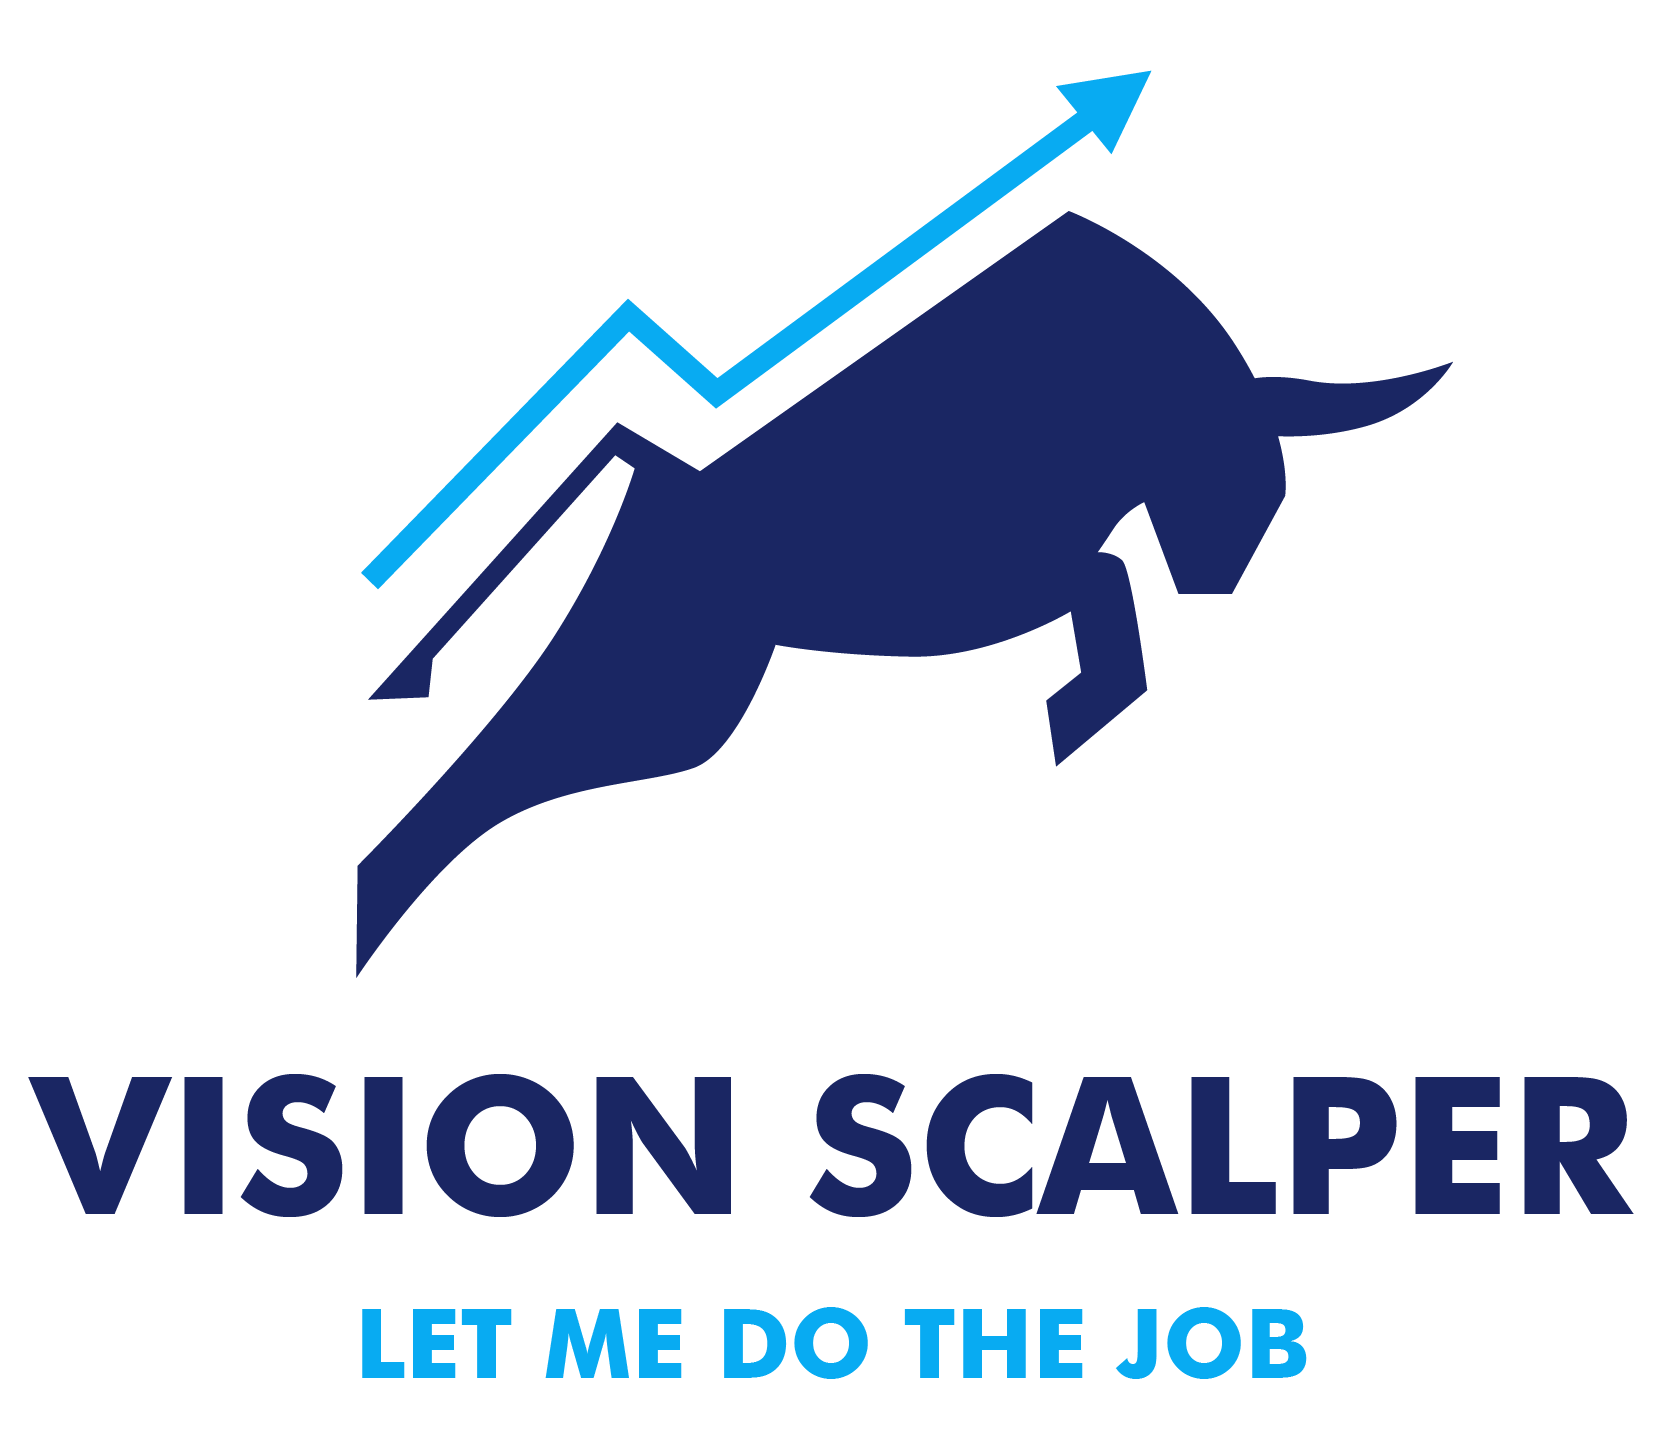 Vision Scalper